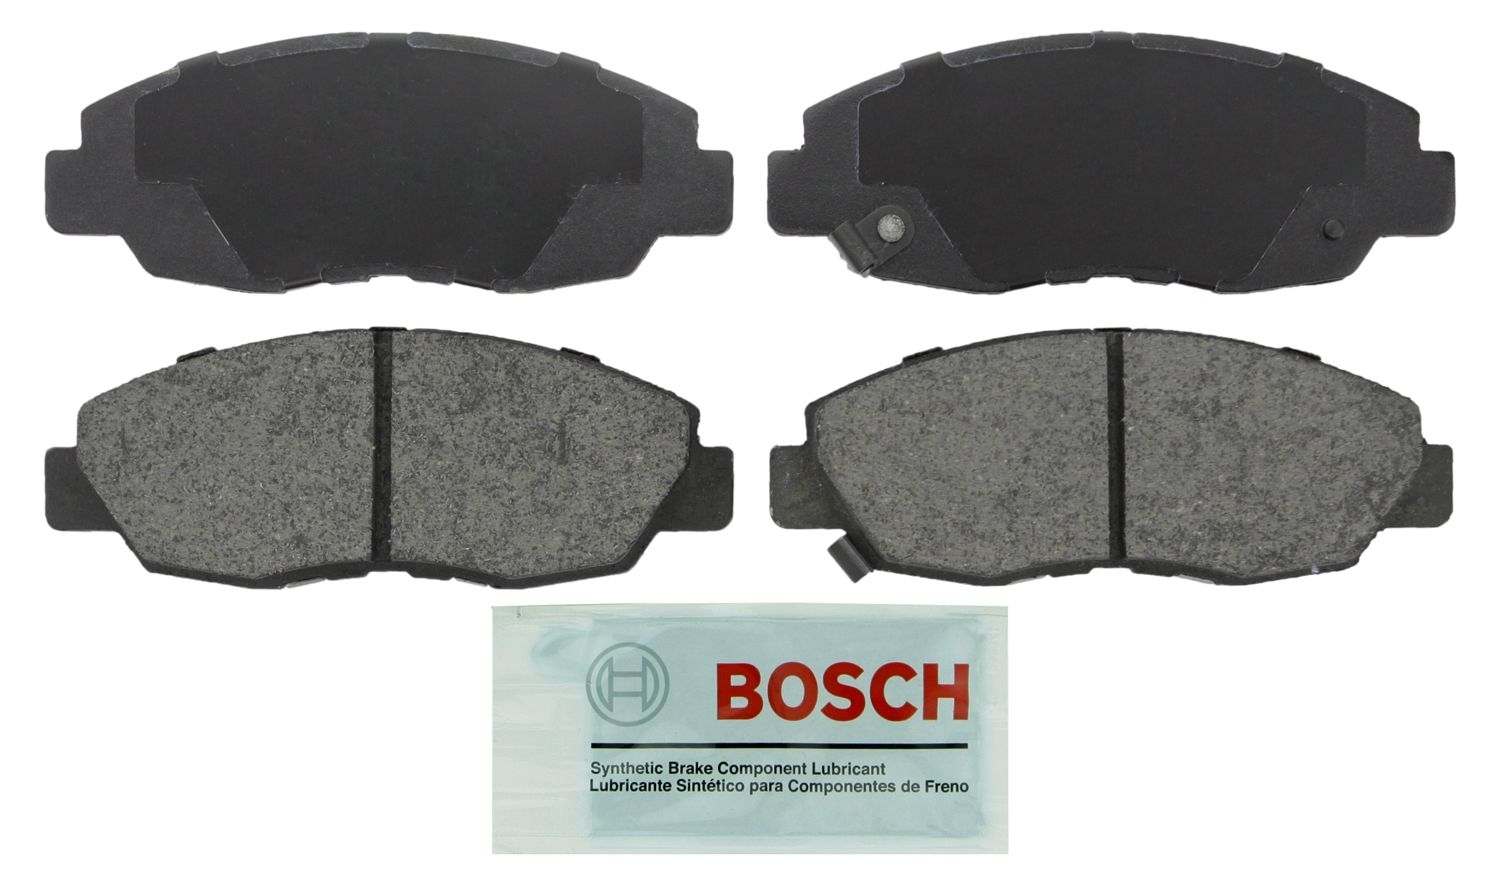 BOSCH BRAKE - Bosch Blue Ceramic Brake Pads - BQC BE465A